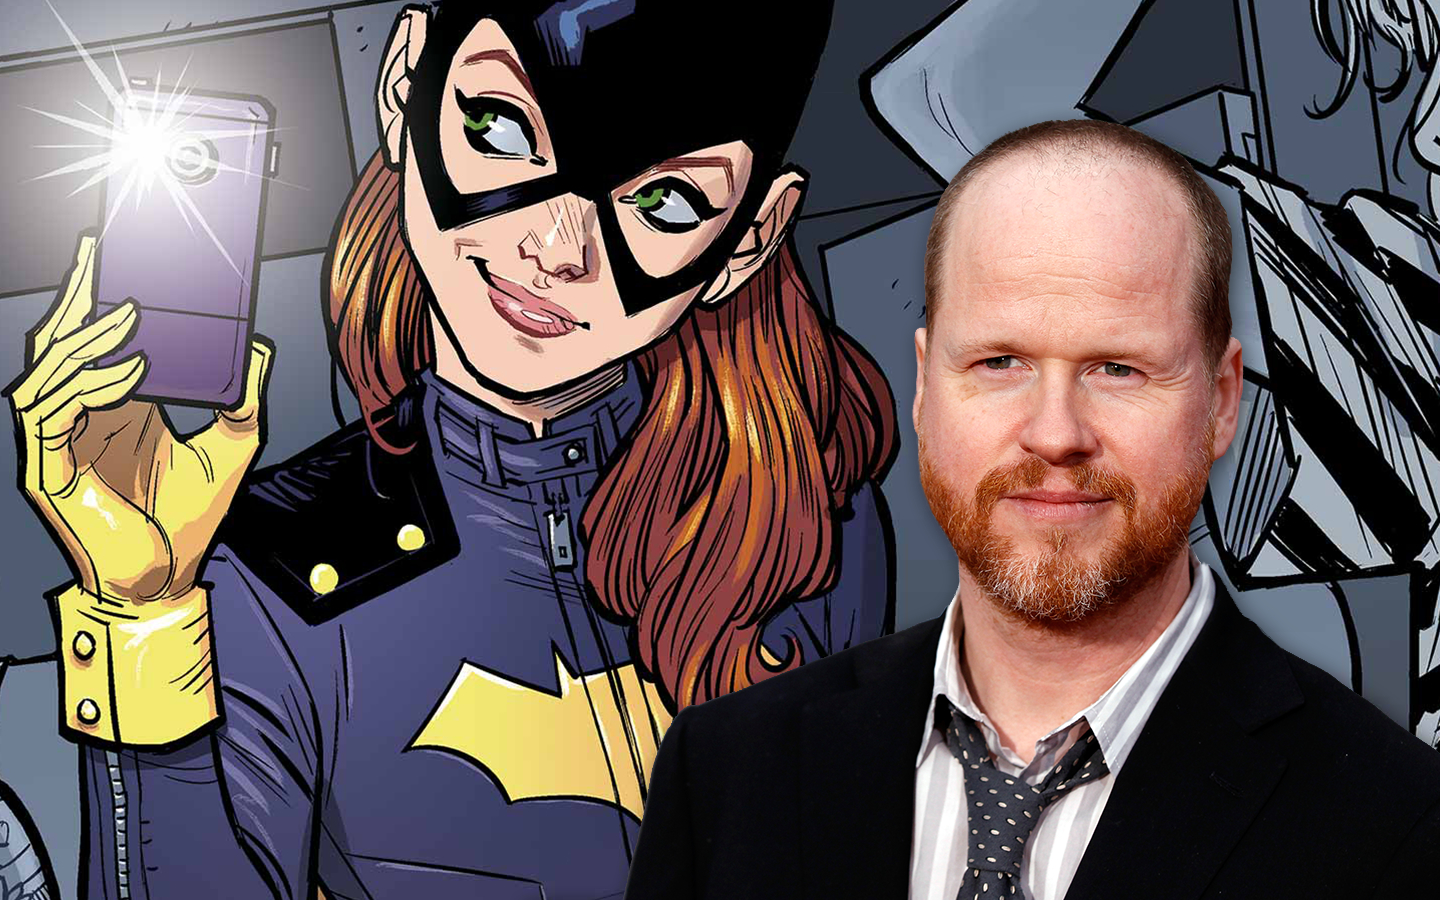 The New 52 Incarnation of Batgirl Will Be Basis for Joss Whedon’s Film